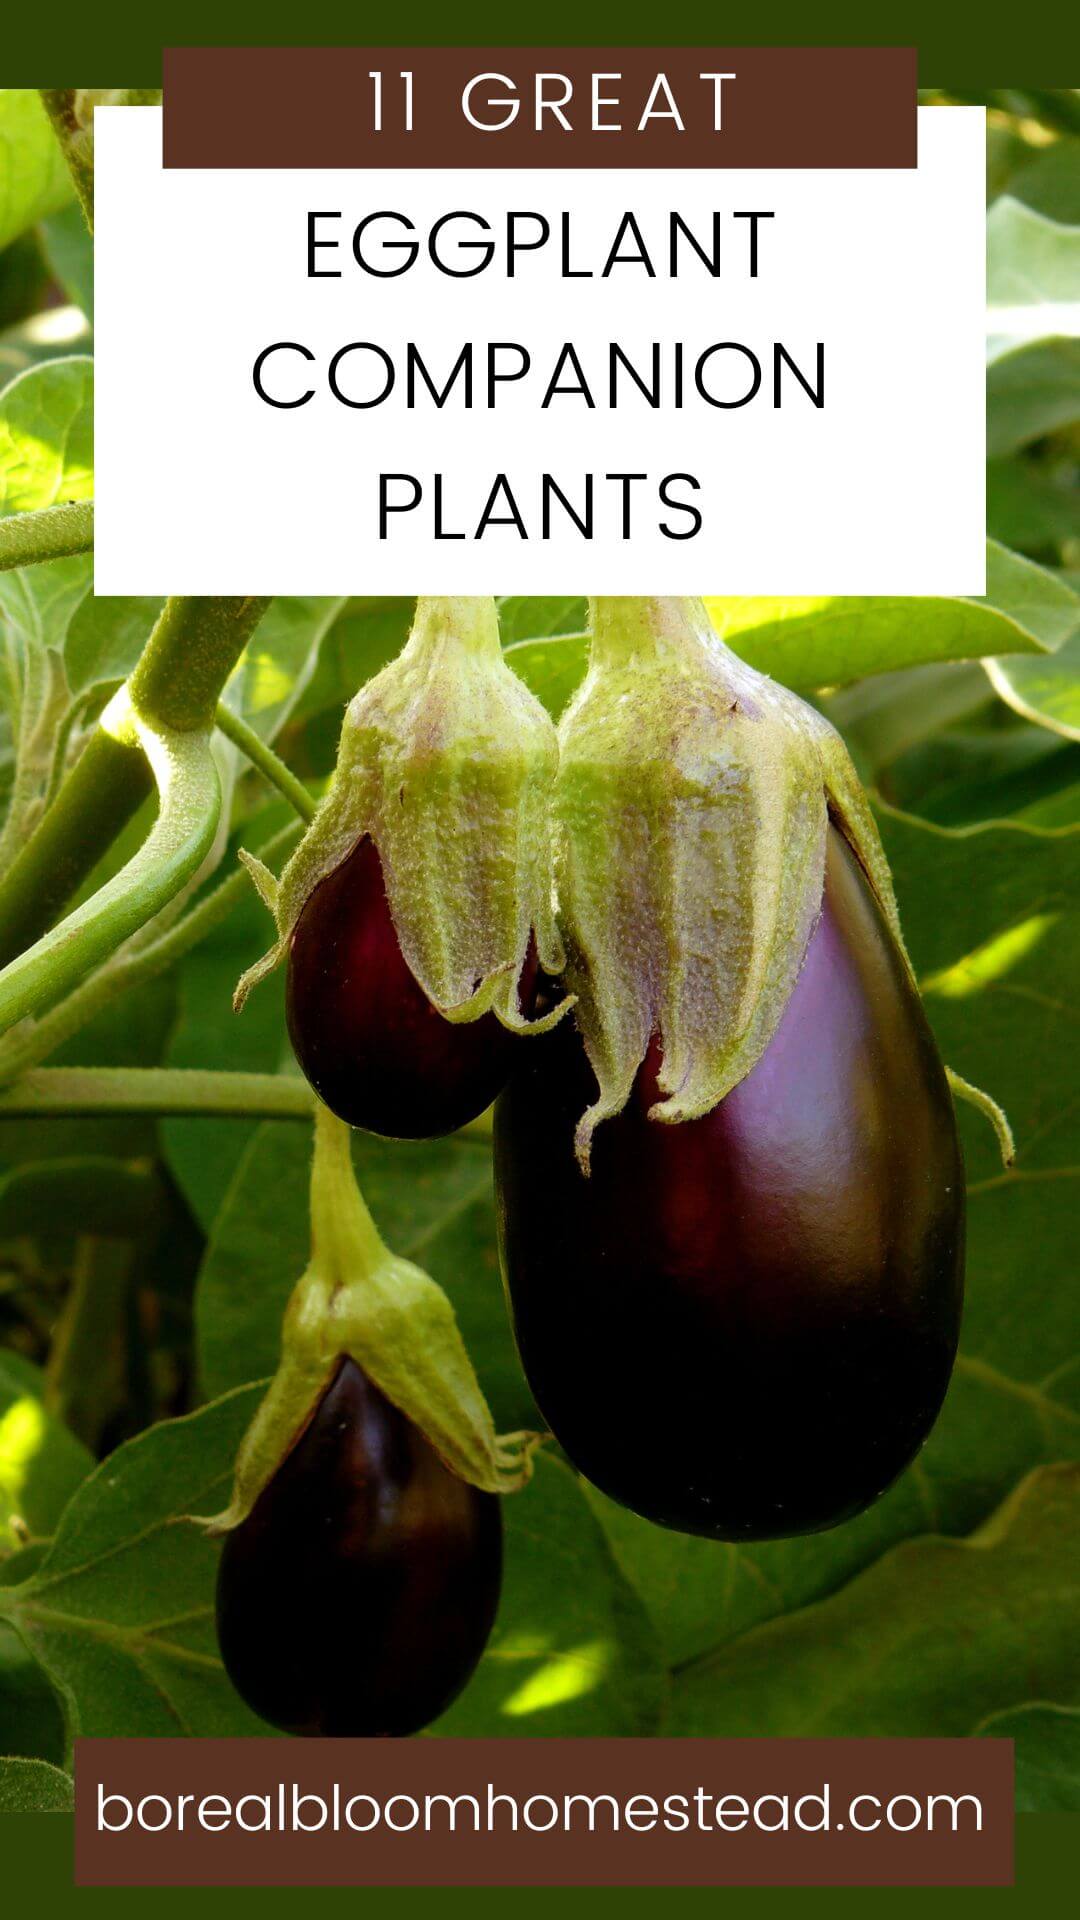 Eggplant plant with text overlay: 11 great eggplant companion plants. 